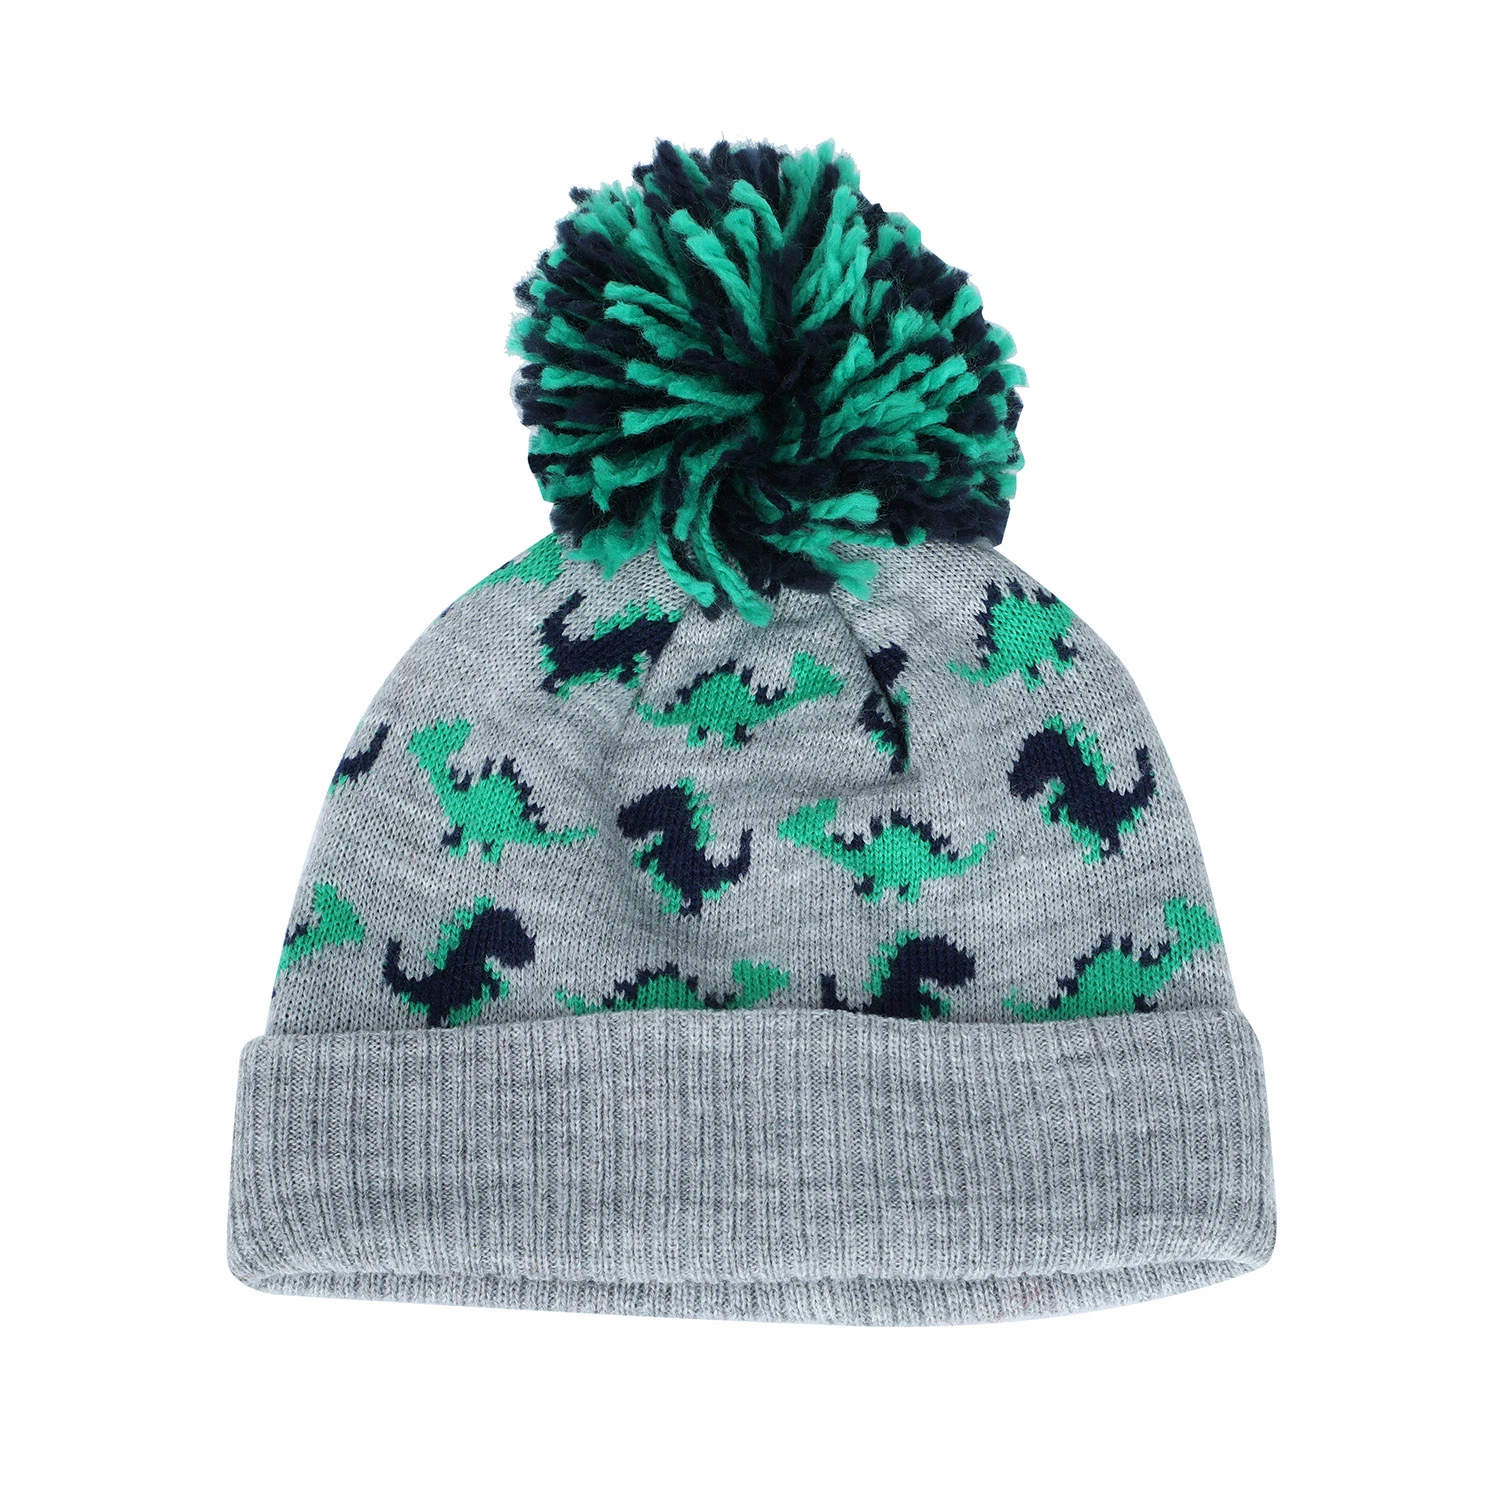 POM POM Thick Cuff Knitted Winter Warm Cap Beanie Hat